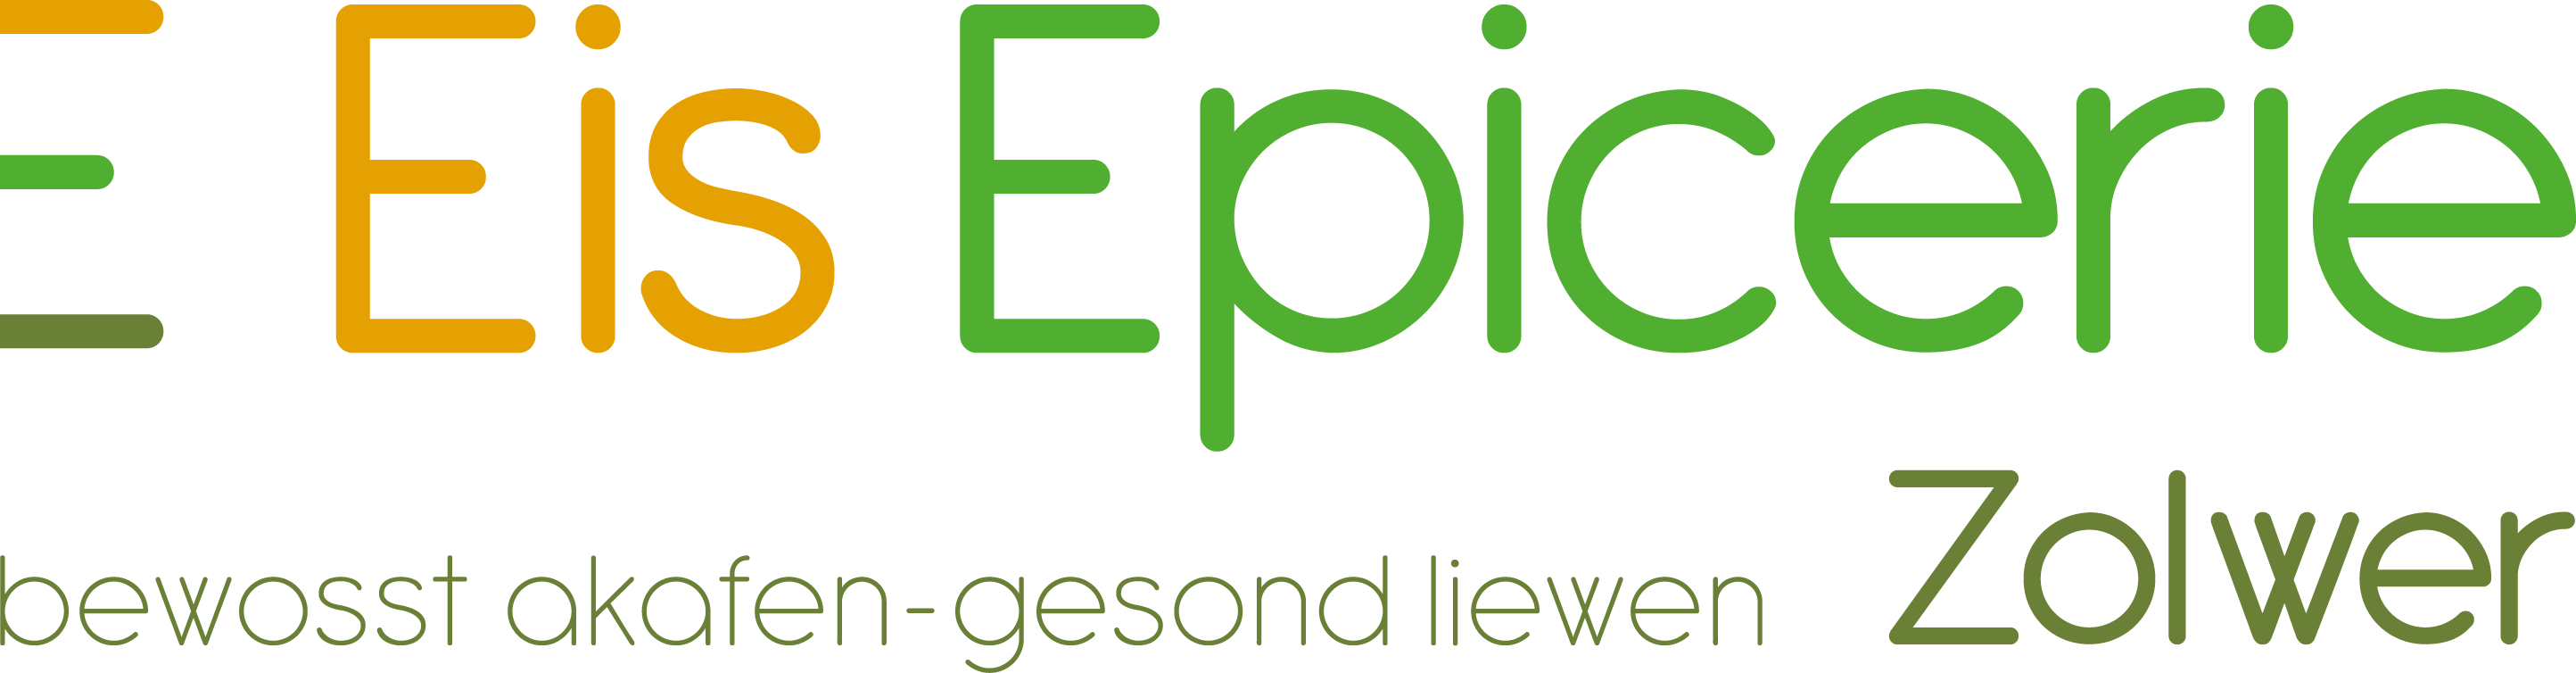 eisepicerie_logo